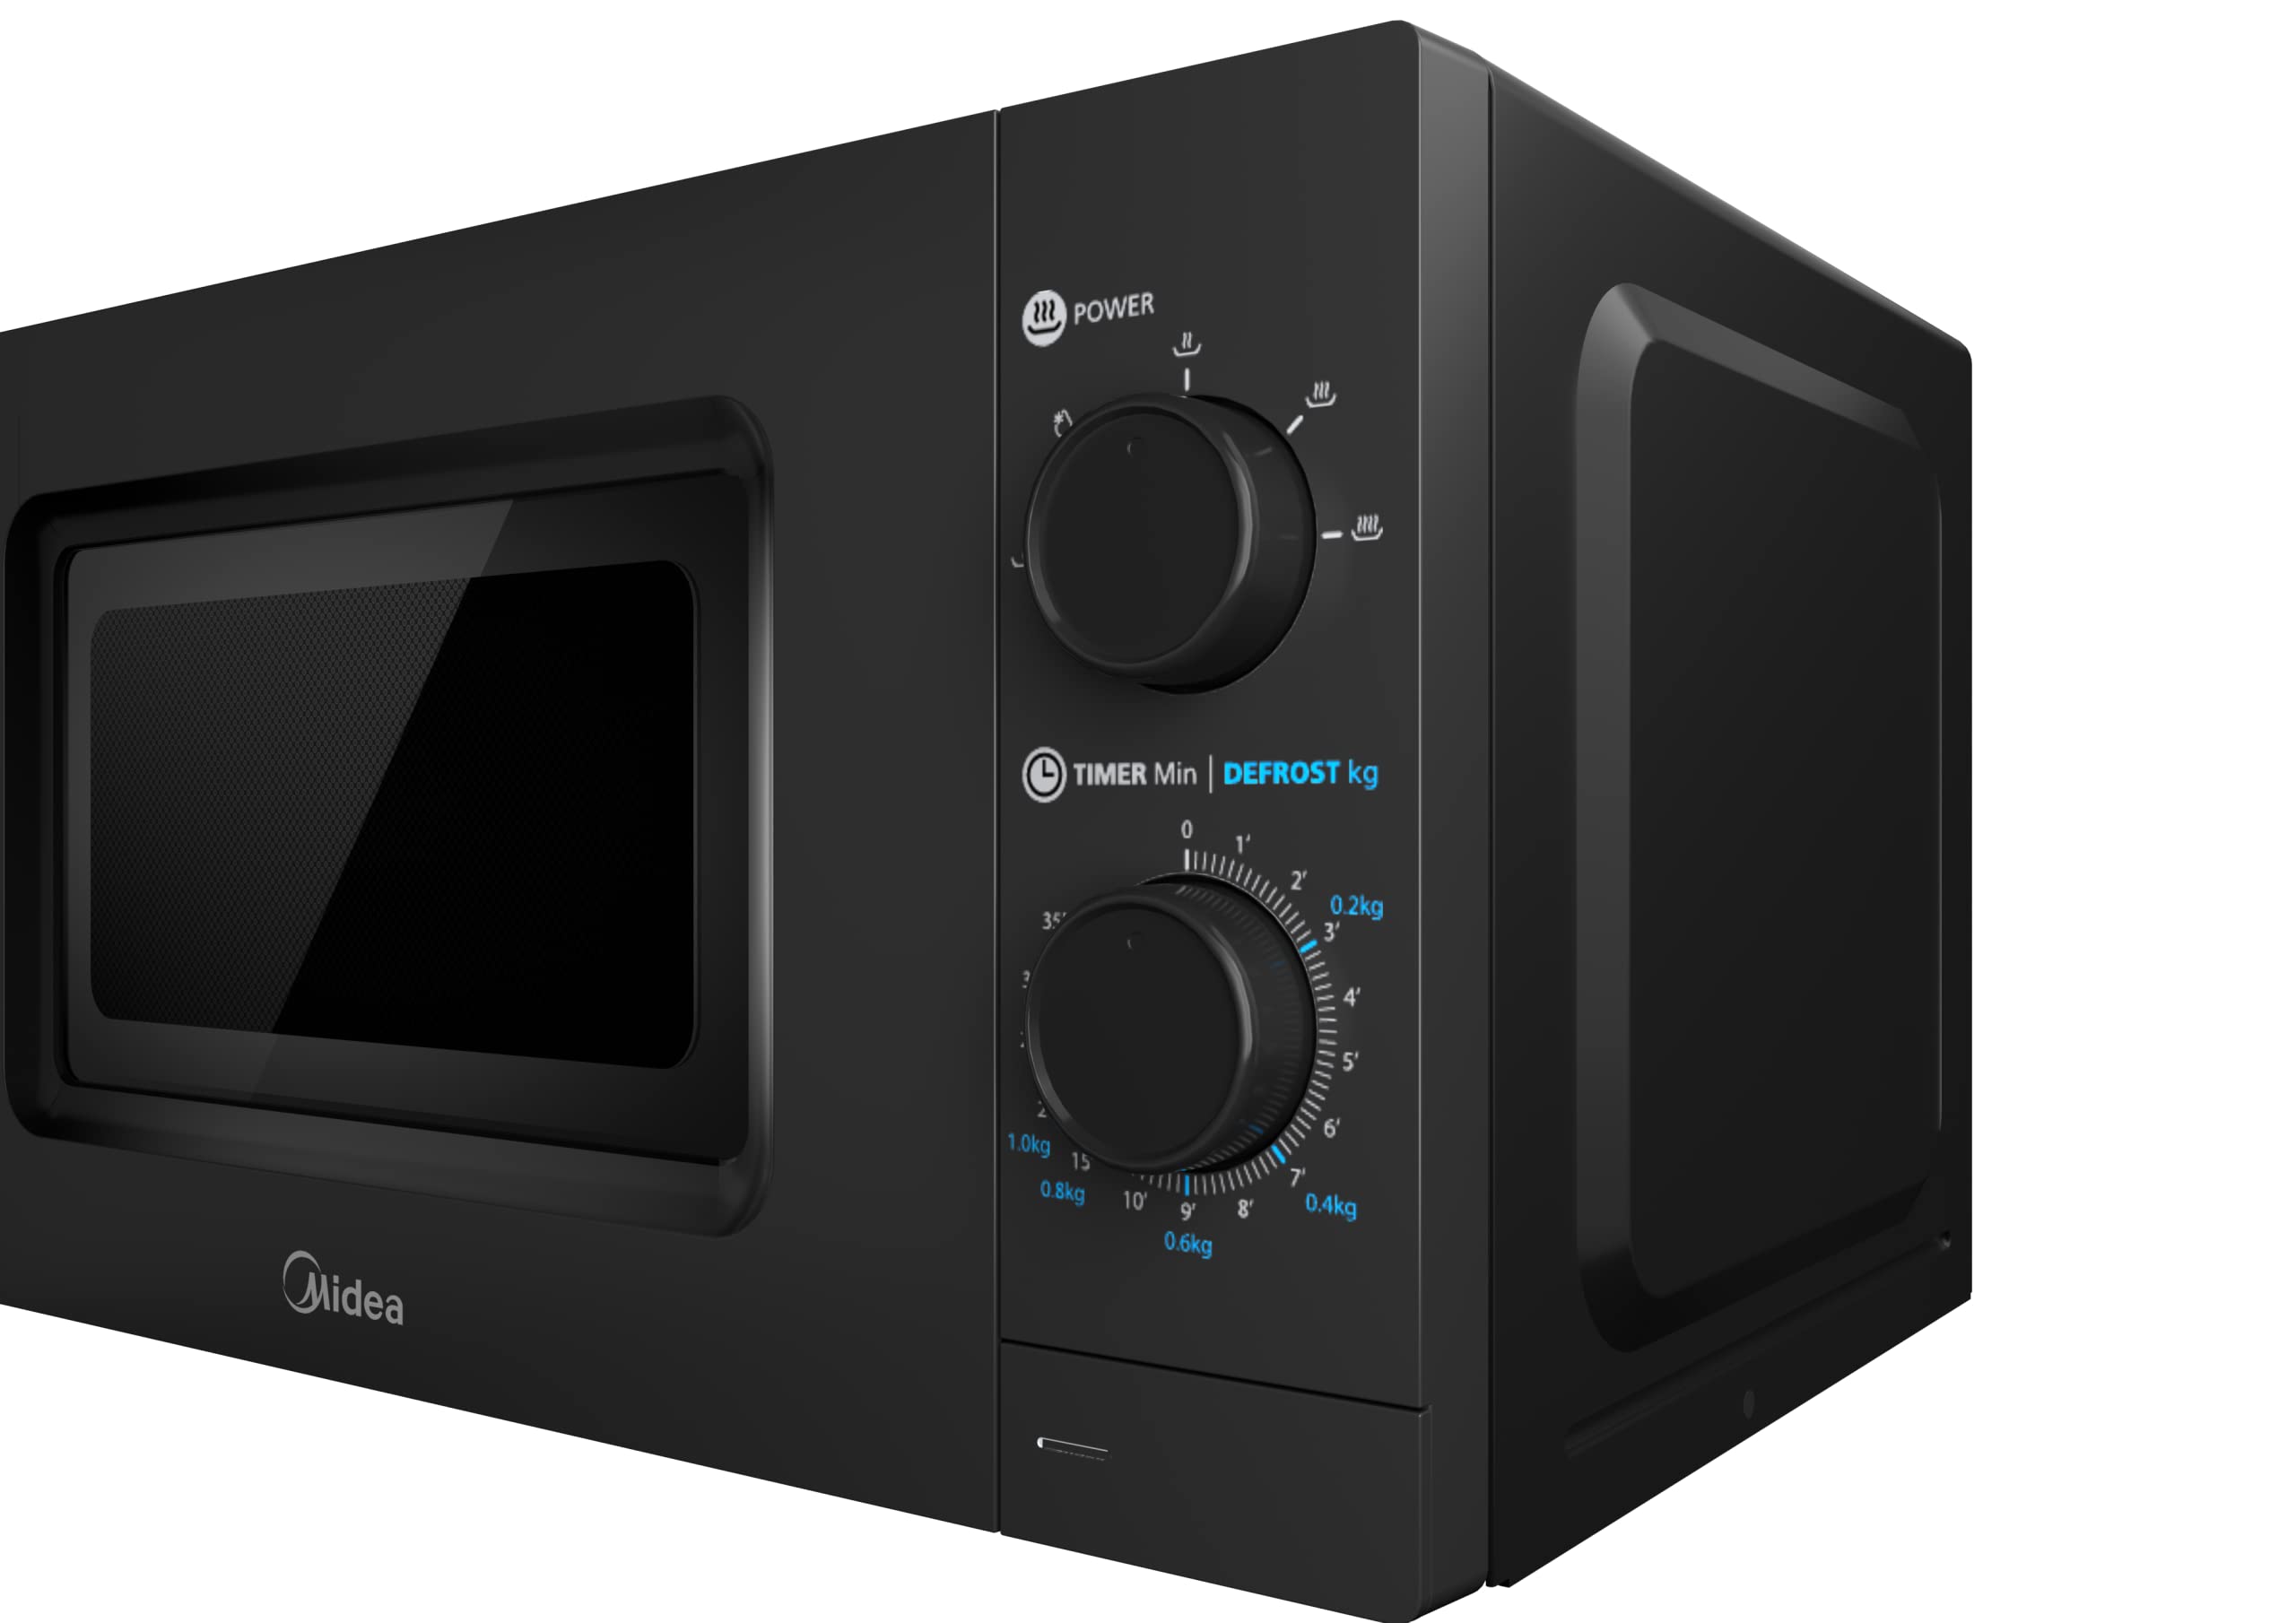 Midea 20 Liters Solo Microwave Oven with 5 Power Levels, 700W فرن ميكروويف سولو 20 لتر من ميديا مع 5 مستويات طاقة، 700 واط